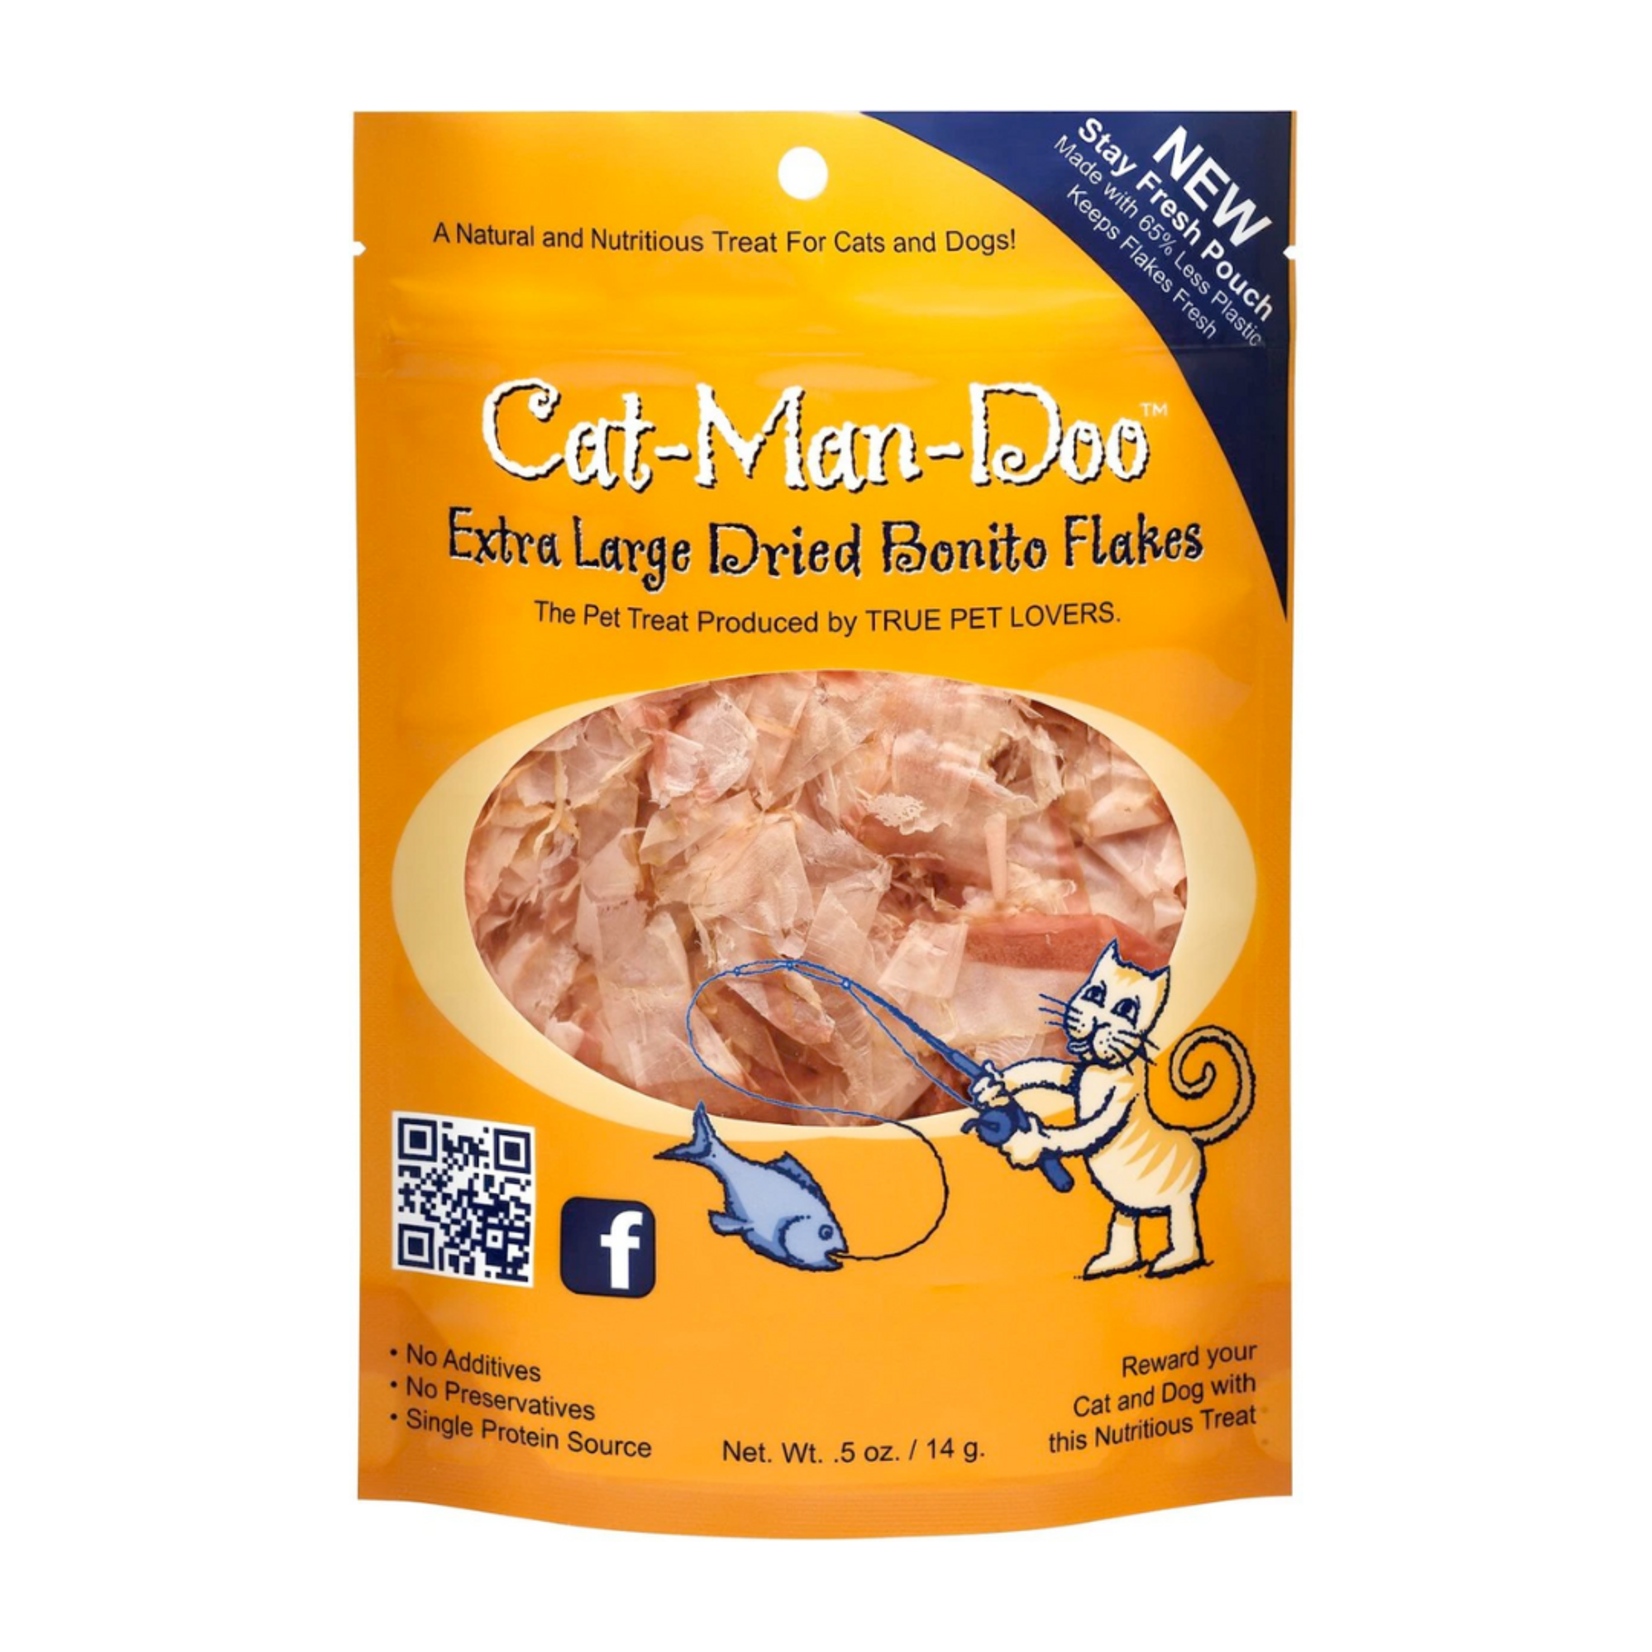 Cat-Man-Doo Inc. Cat-Man-Doo XL Dried Bonito Fish Flakes